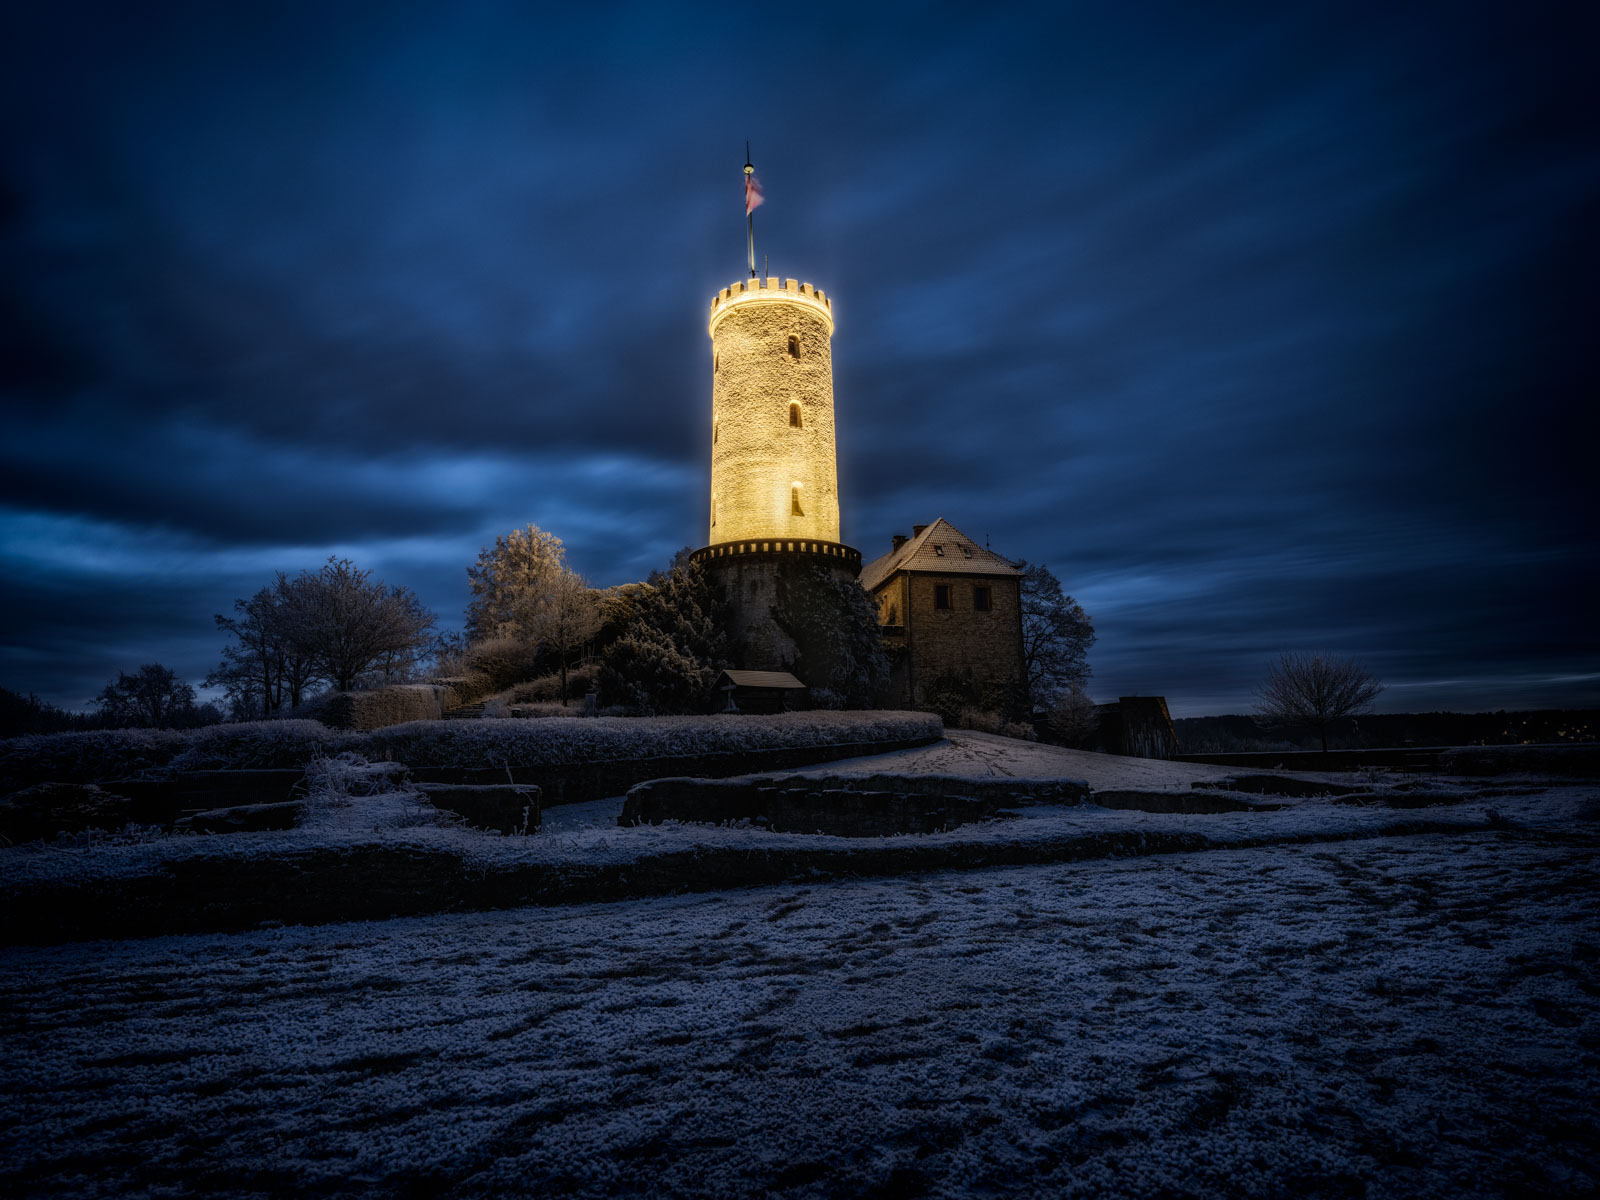 Stormy winter night at Sparrenburg Castle in December 2021 (Bielefeld, Germany).